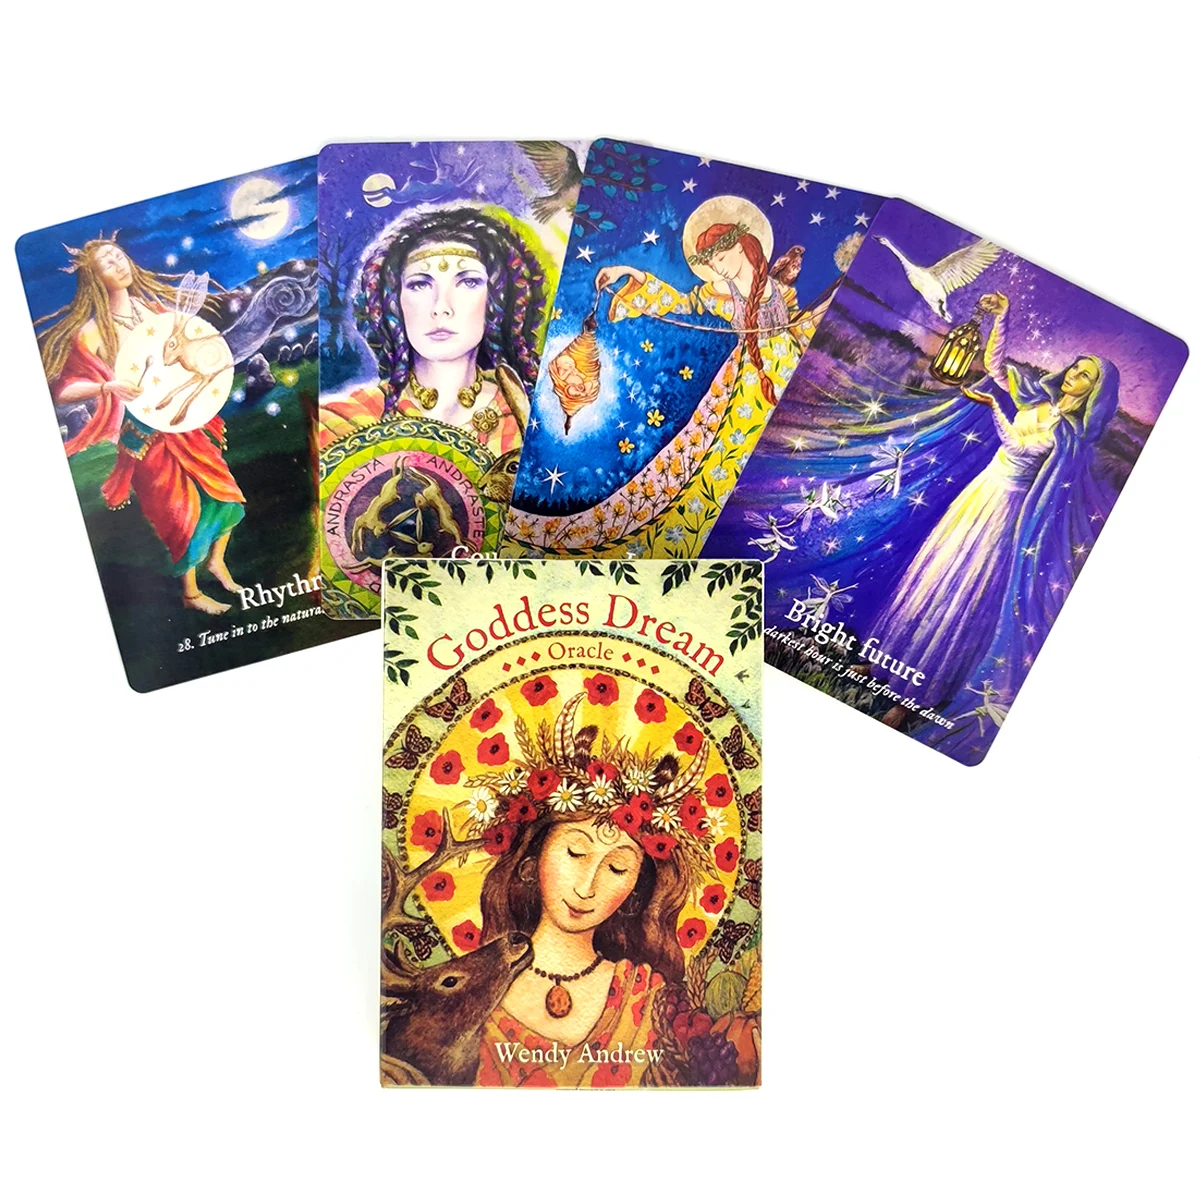 

36pcs Goddess Dream Oracle Cards 36-Card Deck PDF Cards Game Divination